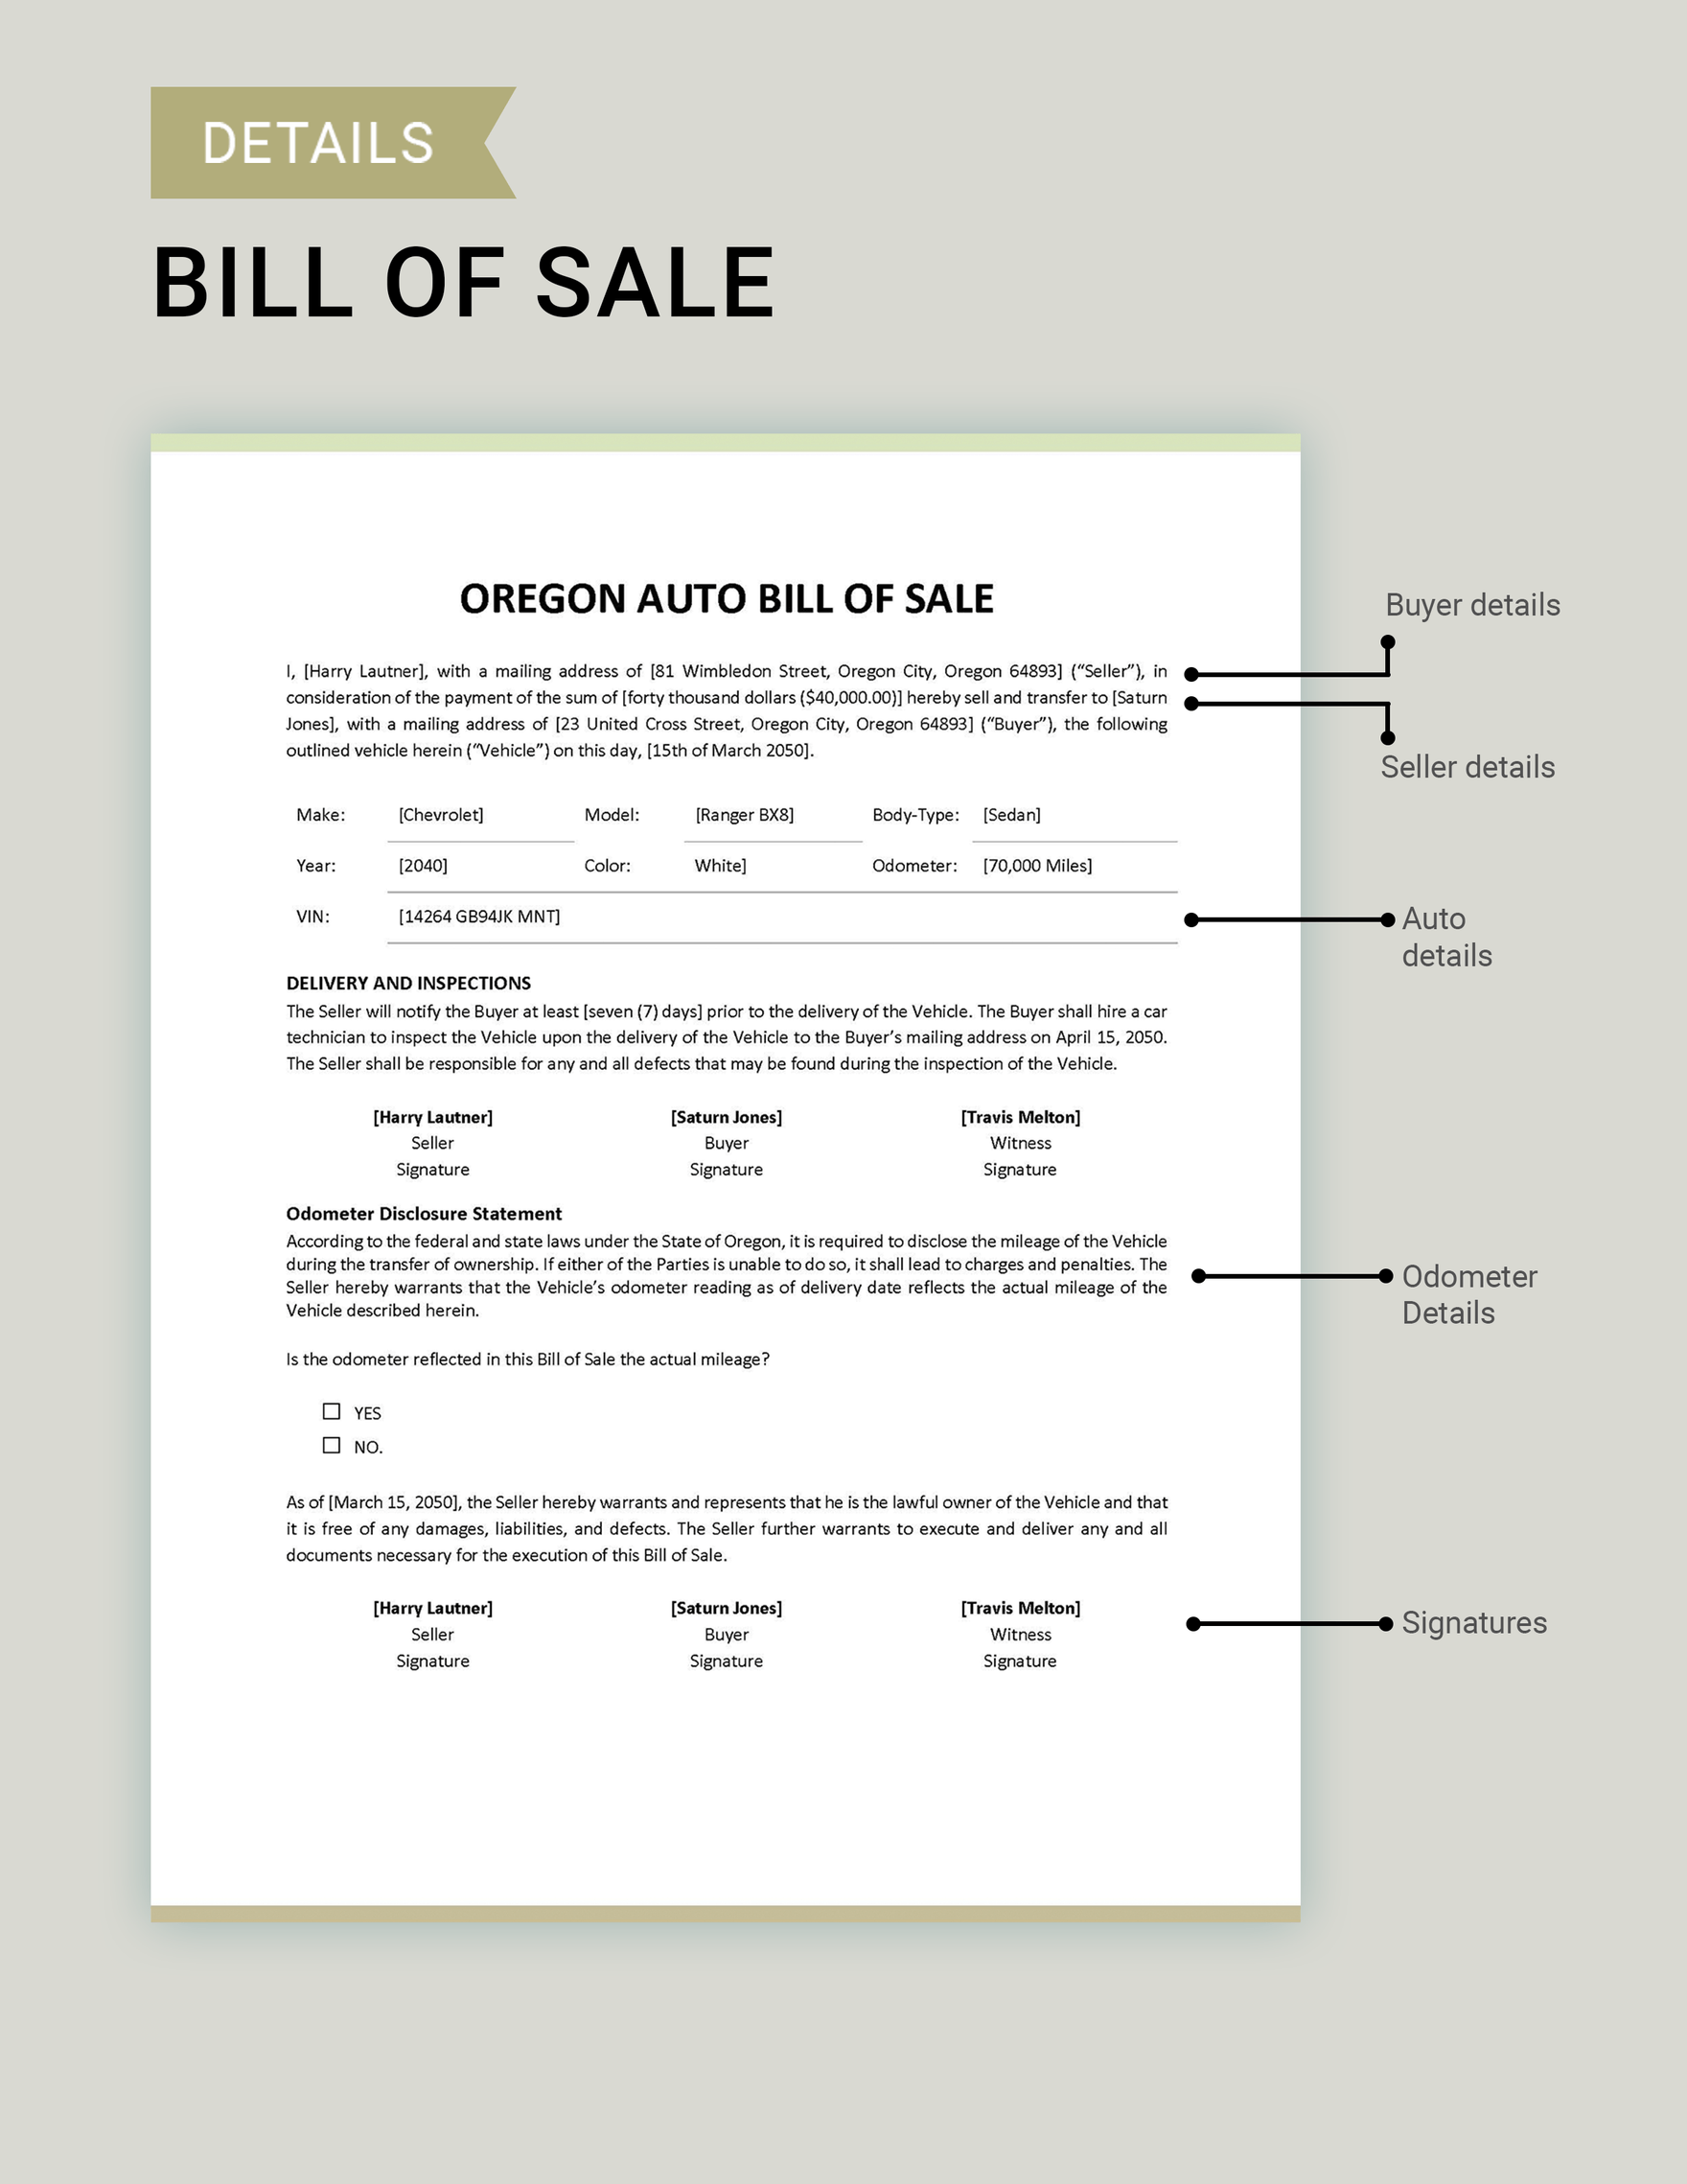 Oregon Auto Bill of Sale Template